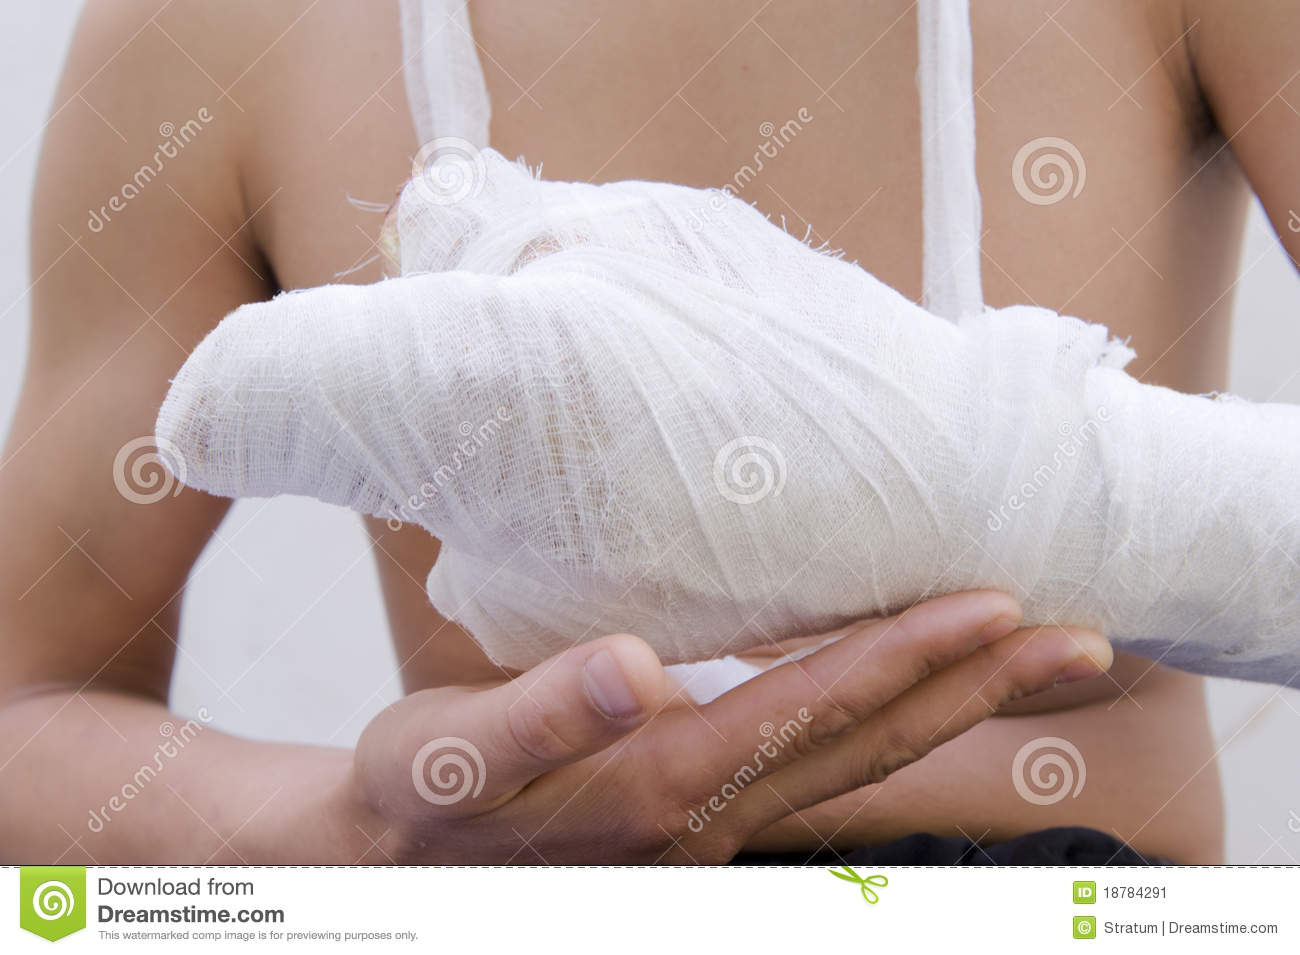 Injured Hand Stock Image   Image  18784291